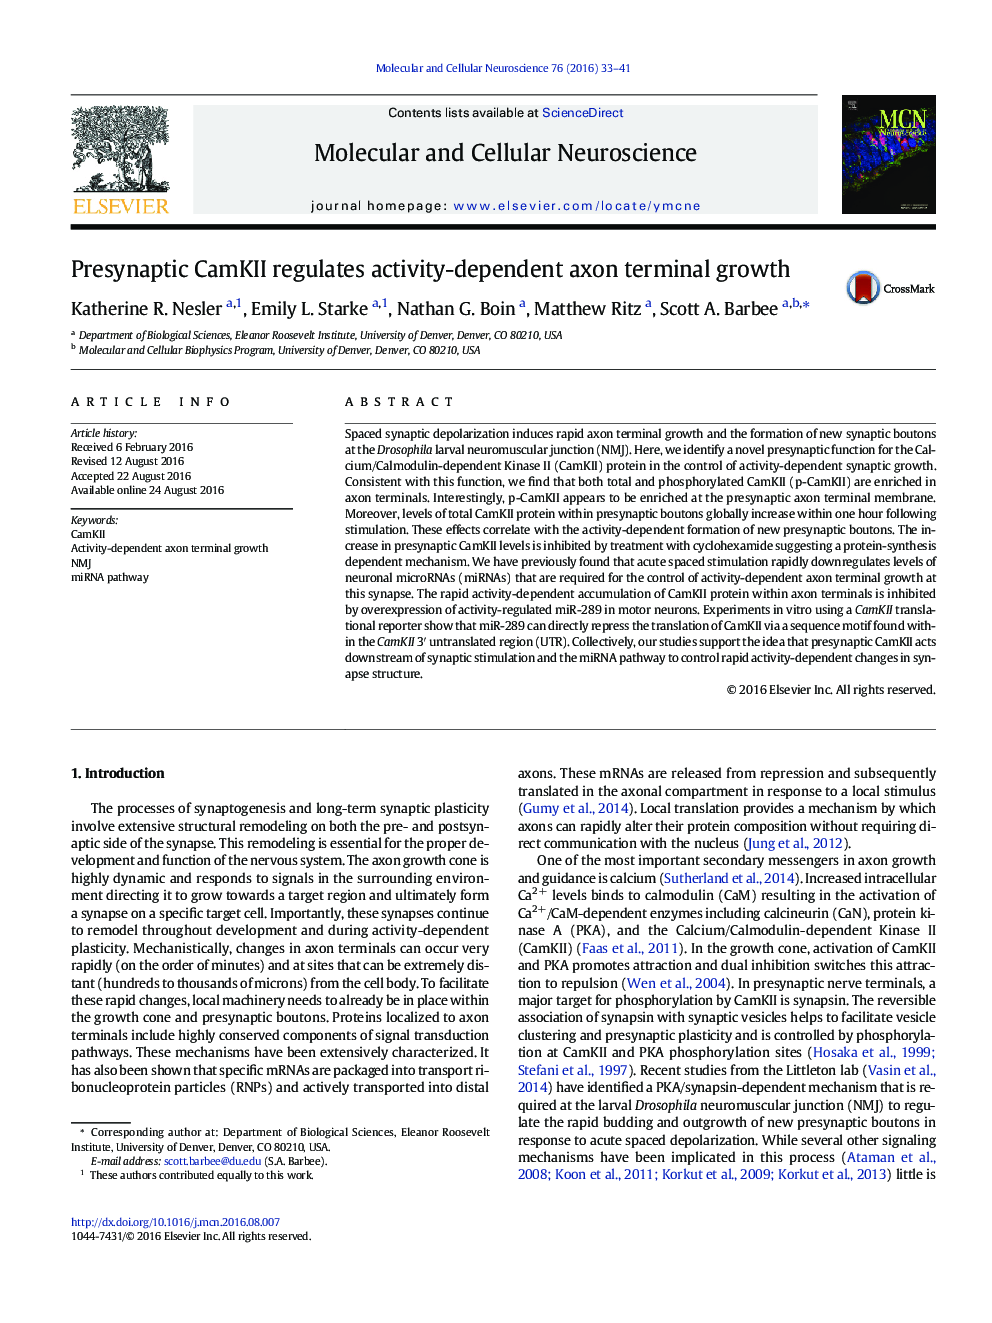 Presynaptic CamKII regulates activity-dependent axon terminal growth